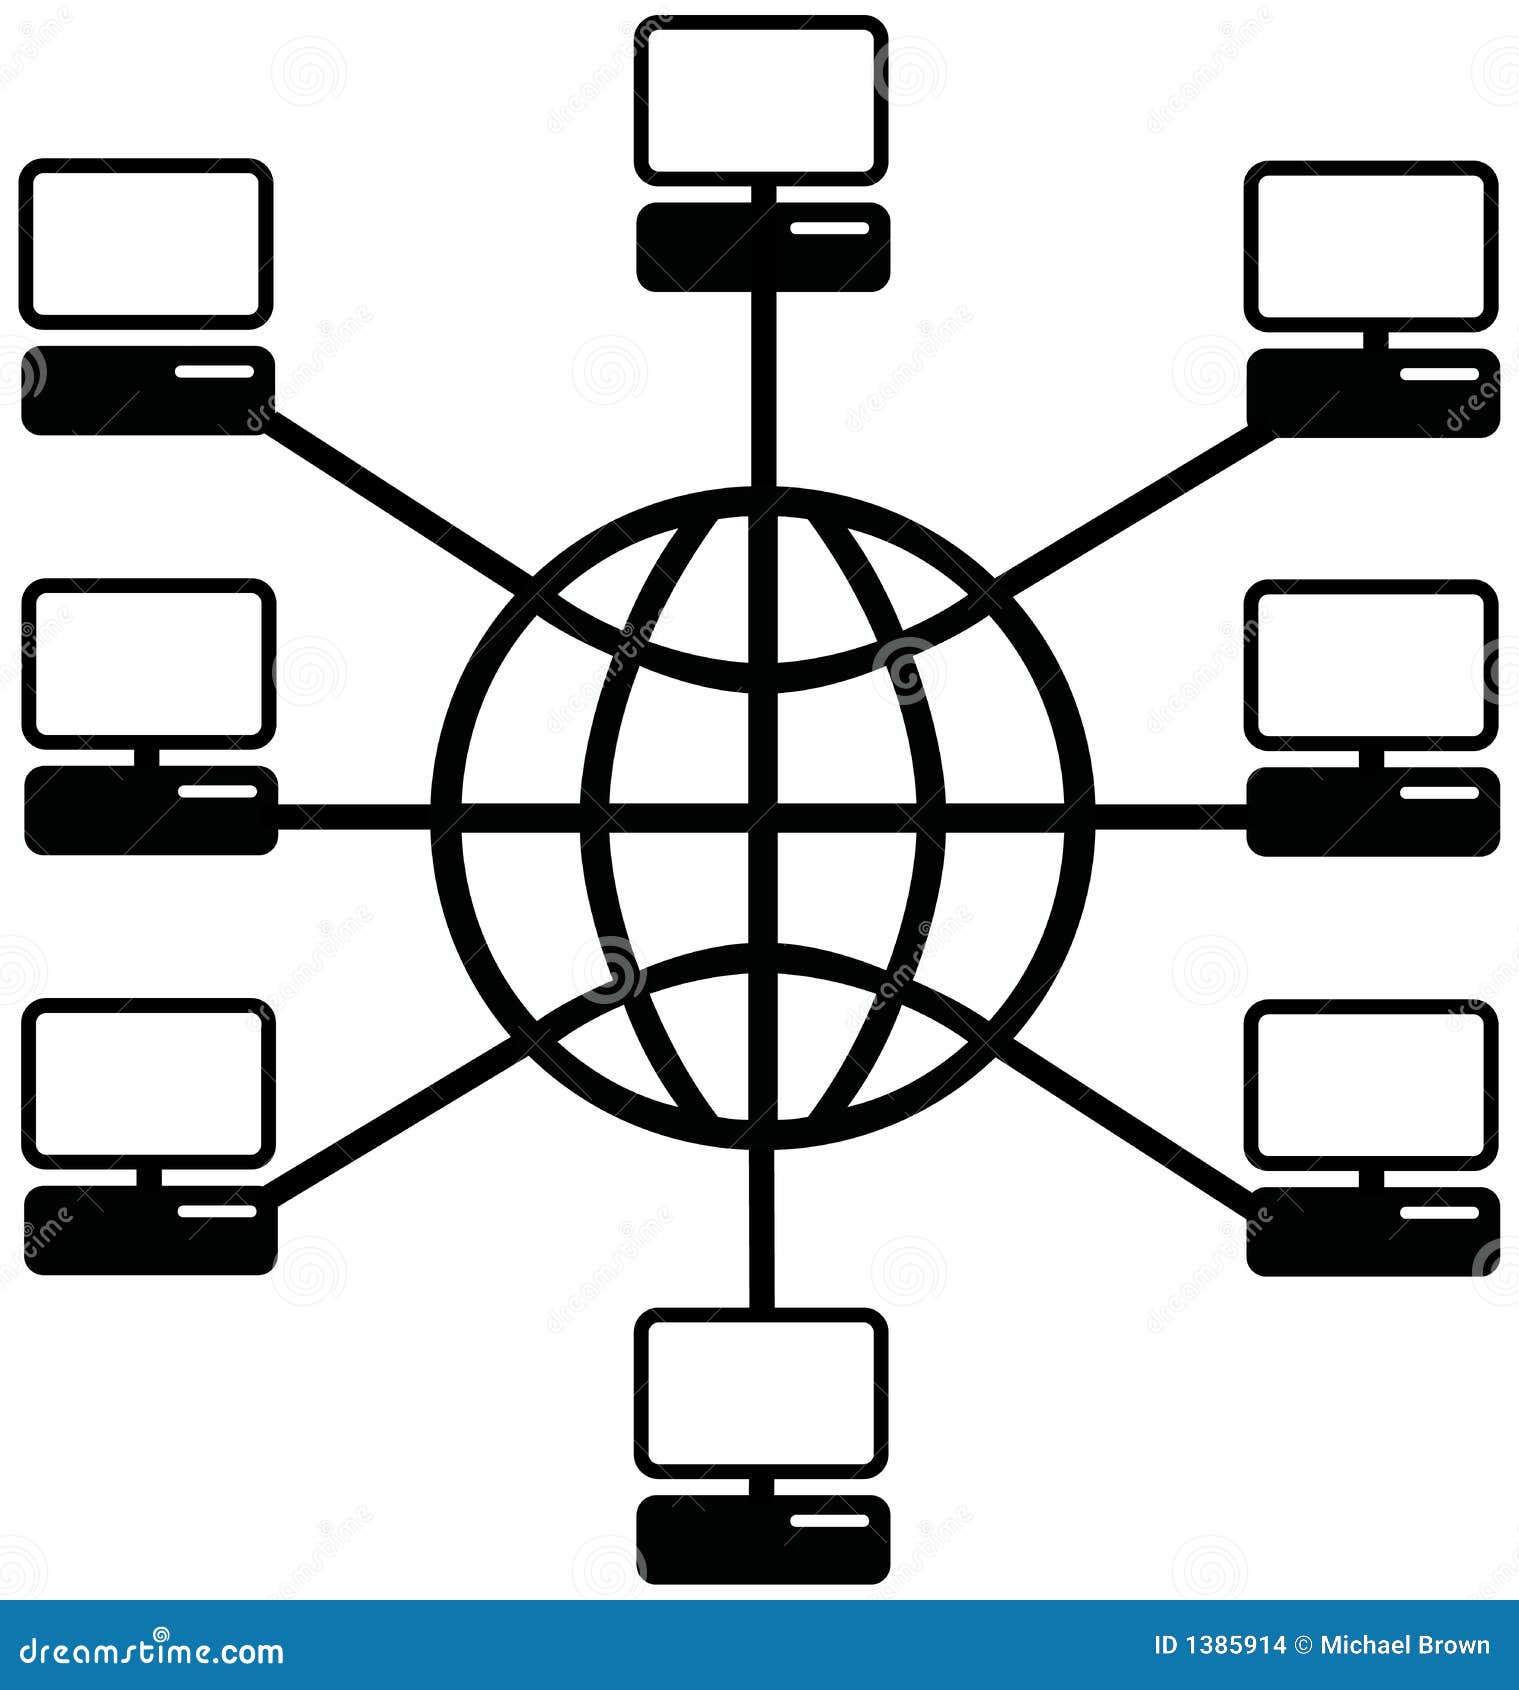 Global Computer Network Stock Vector Illustration Of Illustration